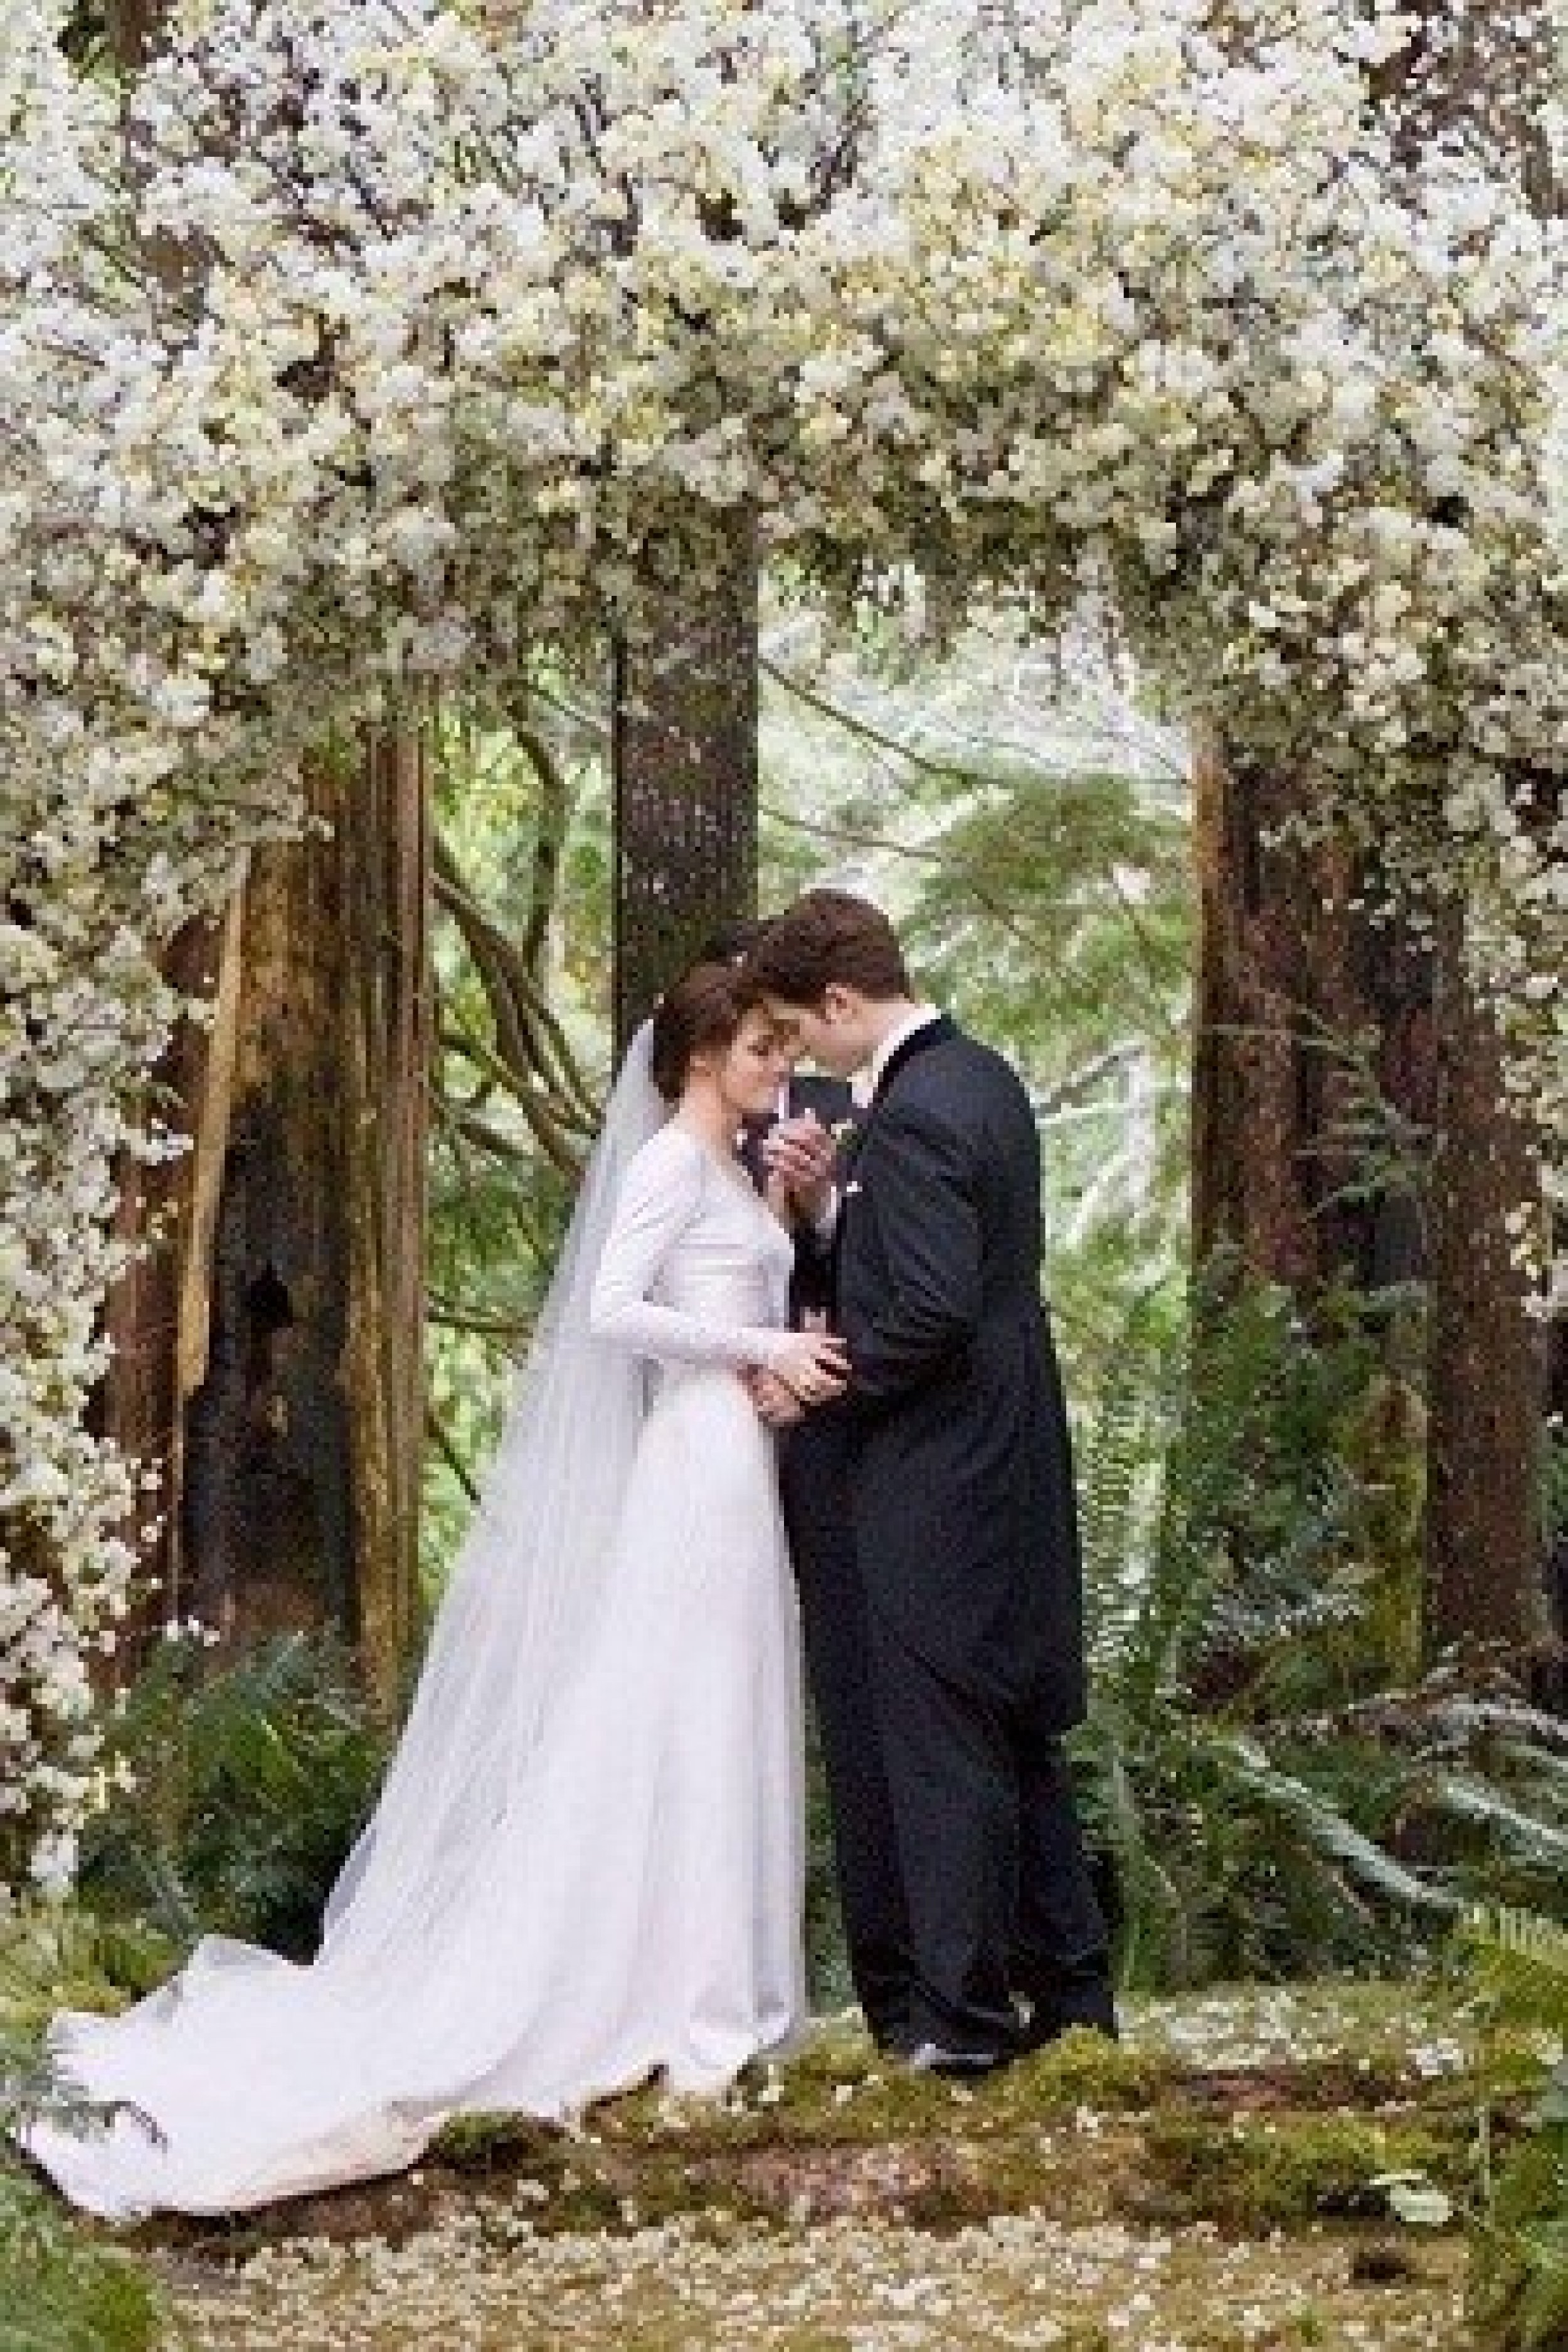 Robert Pattinson And Kristen Stewarts On-Screen Romantic Moments From Twilight Saga PHOTOS